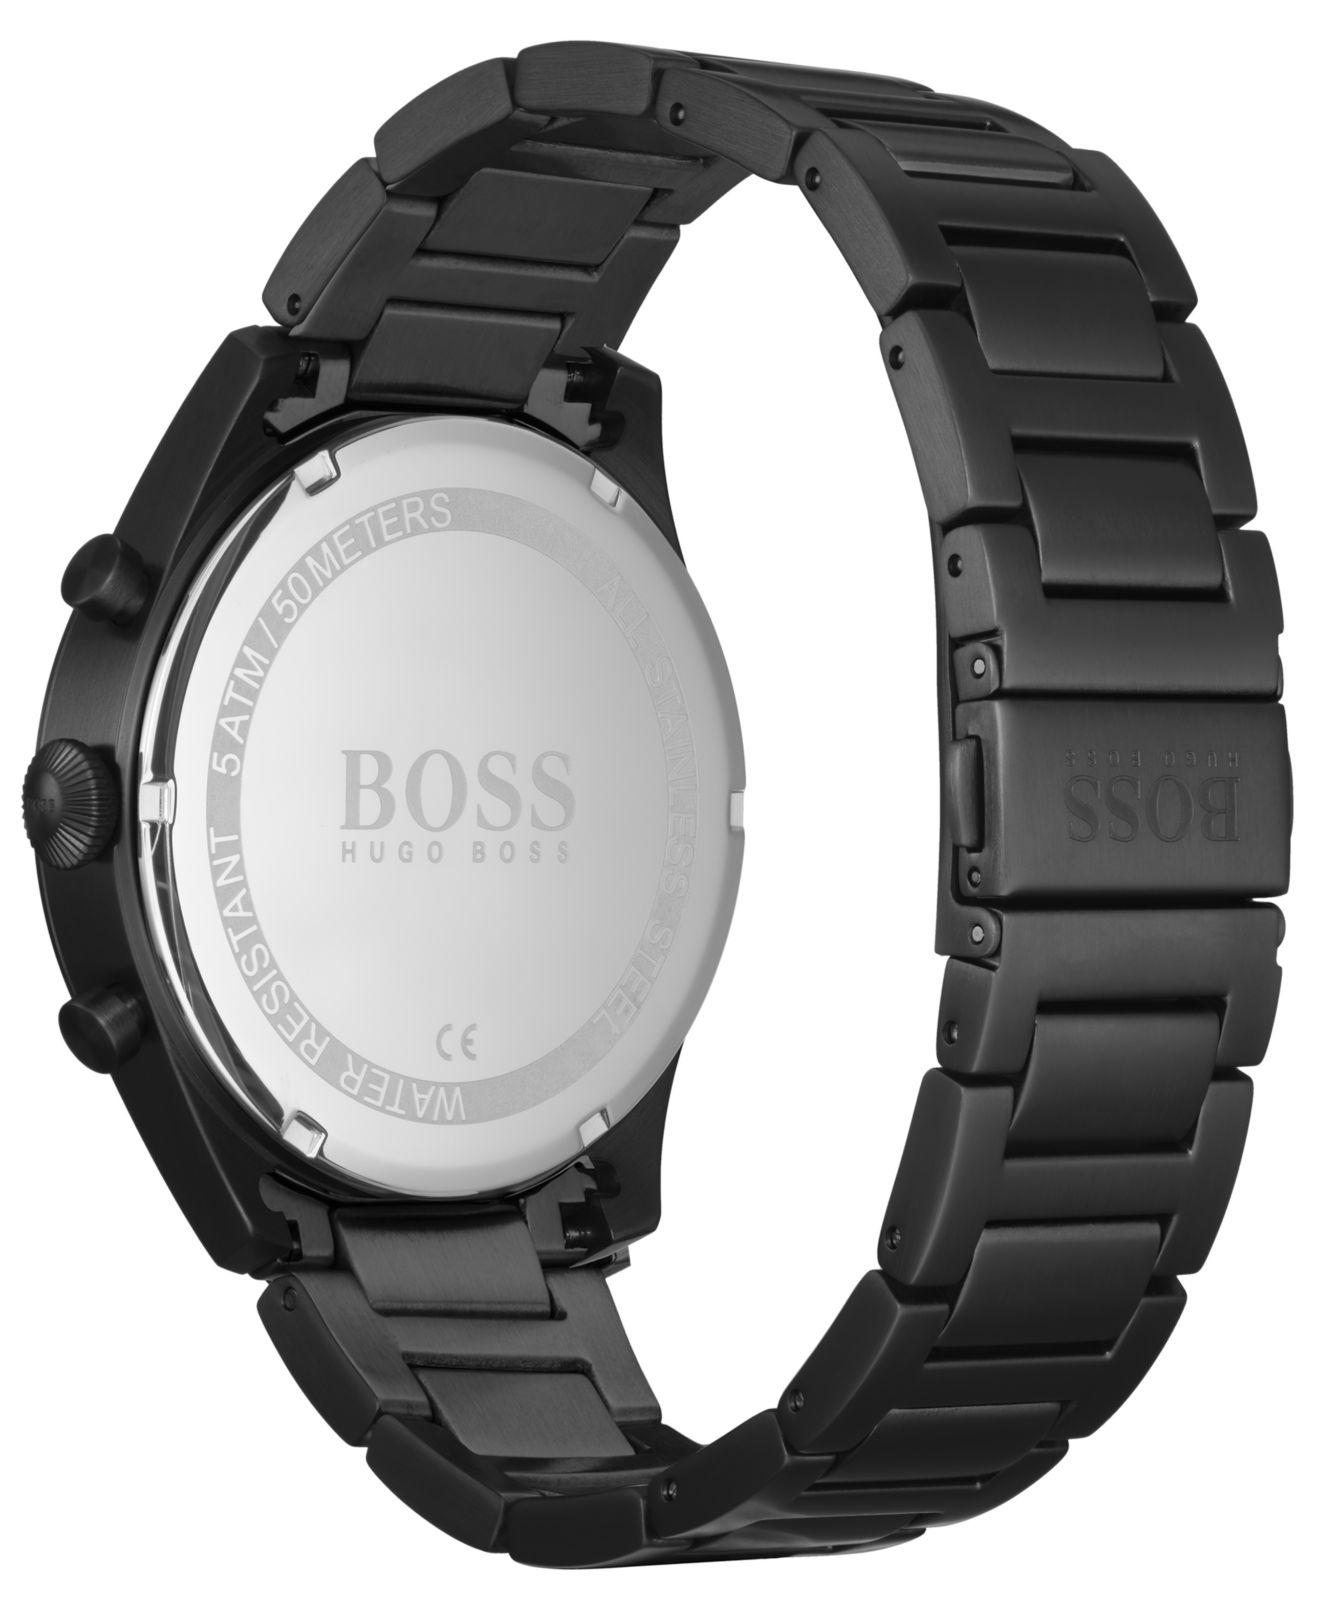 boss black watches